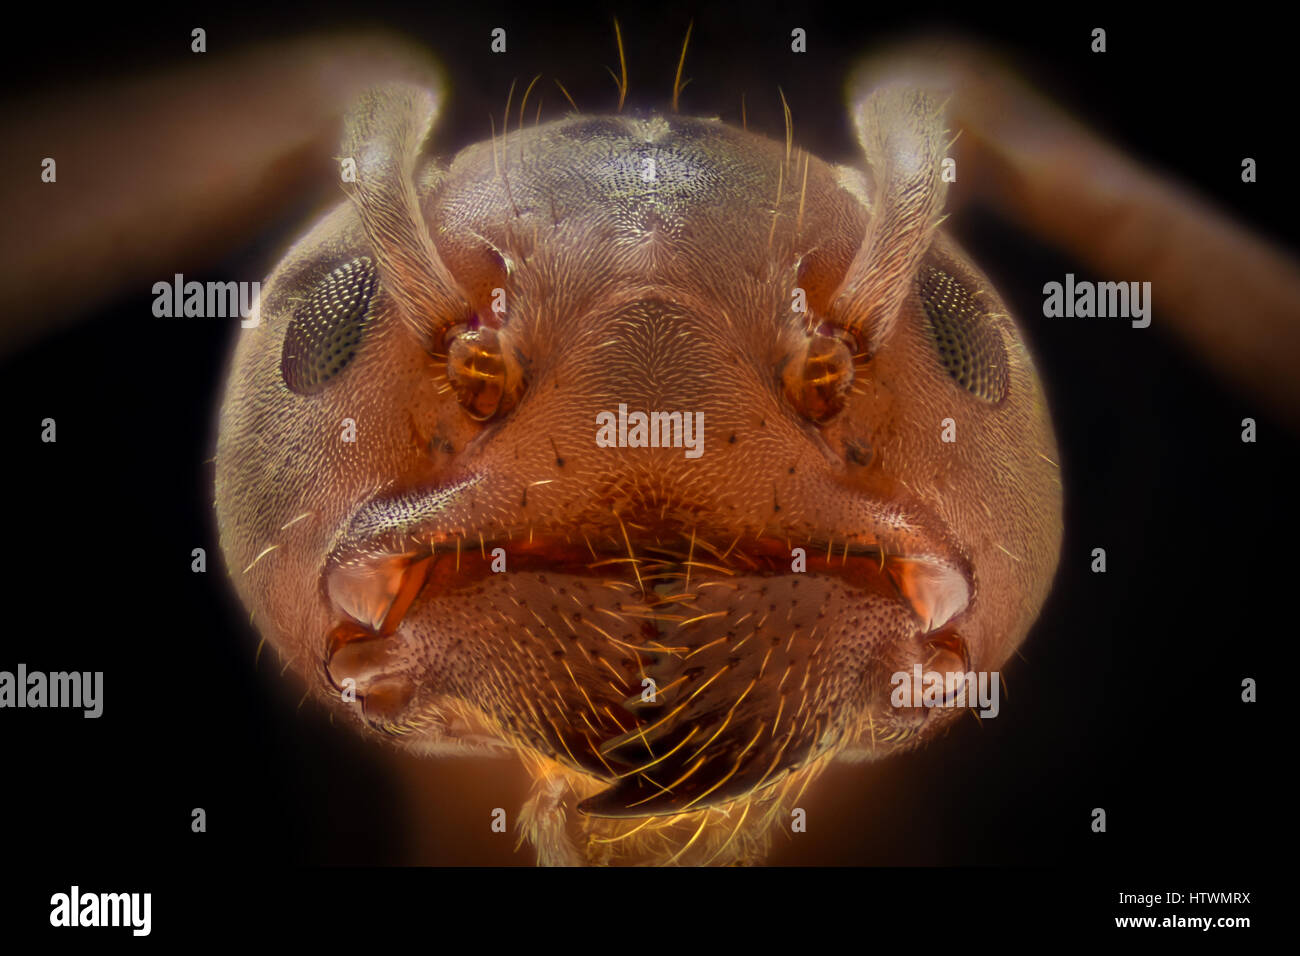 Extreme ingrandimento - Ant i dettagli di testa Foto Stock